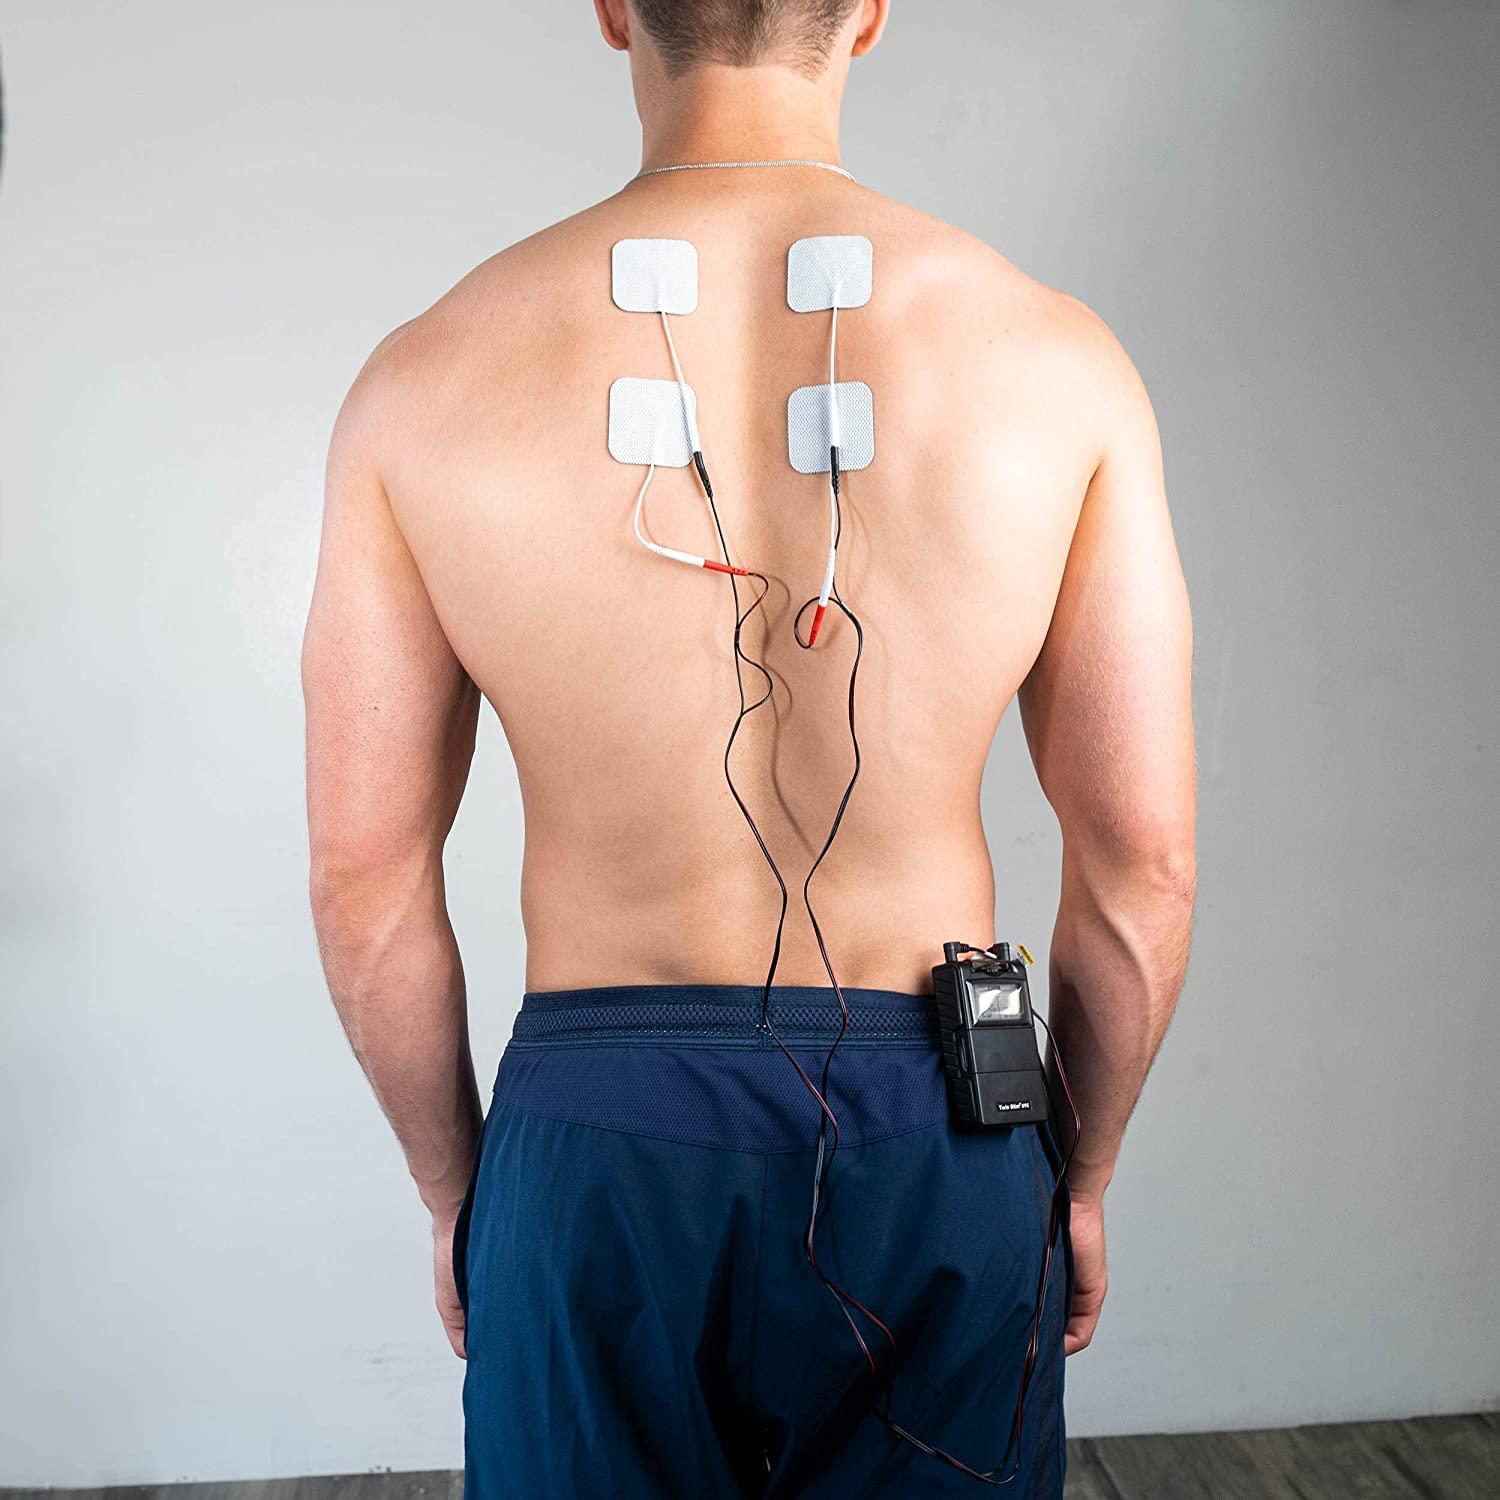 Tens Unit Muscle Stimulator 4 Channel Back,Neck Pain Relief